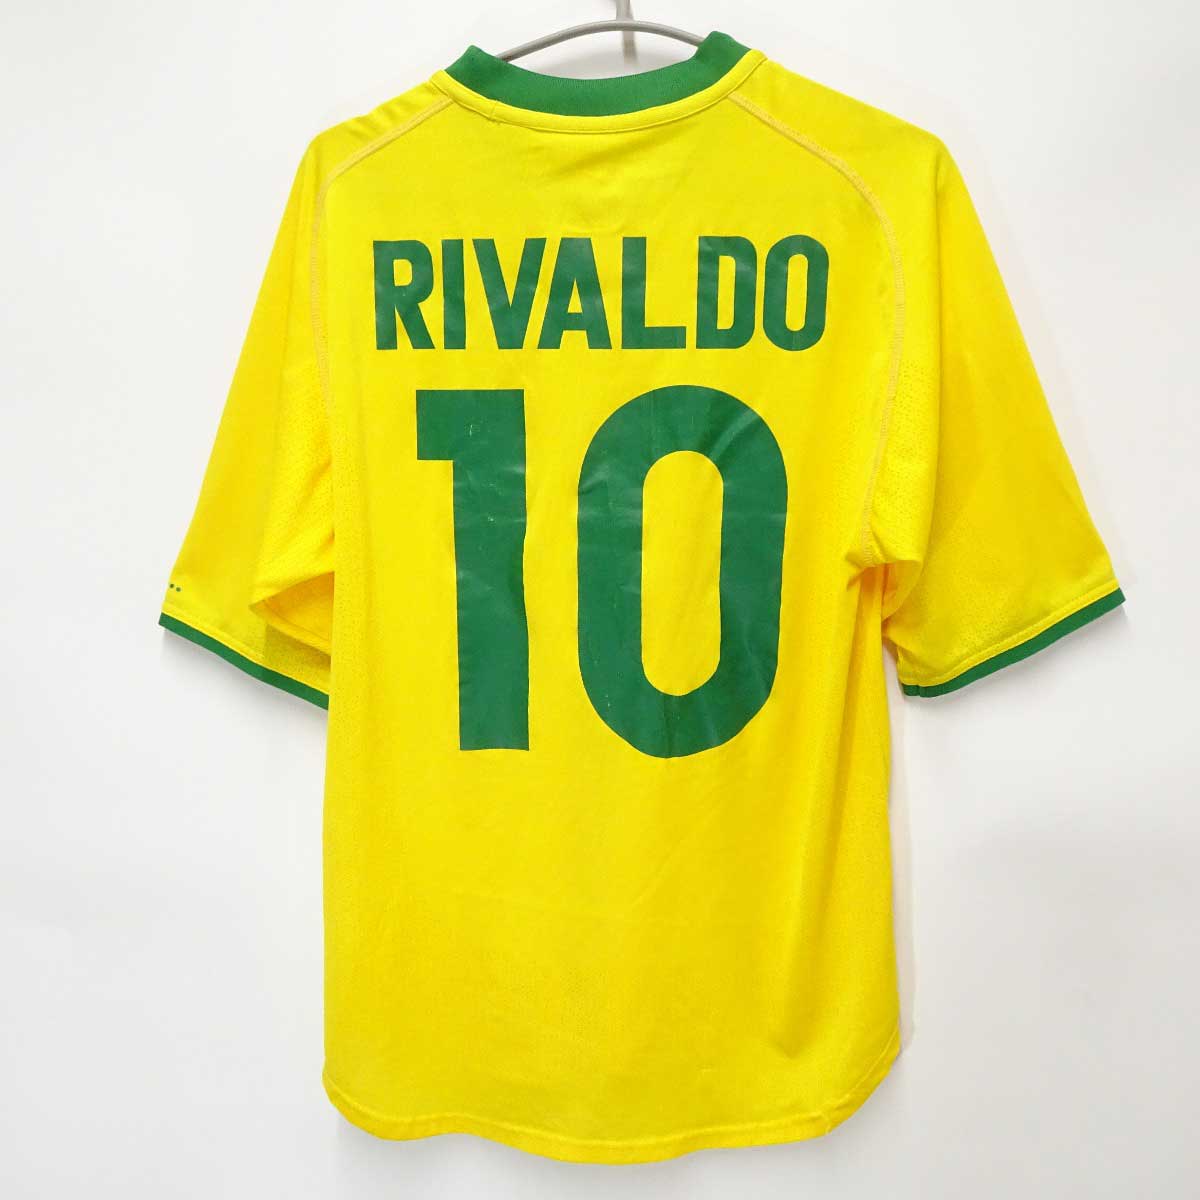 NIKE【中古】 ナイキ サッカー ブラジル代表 2000 ユニフォーム ホーム #10 リバウド 14037 NIKE